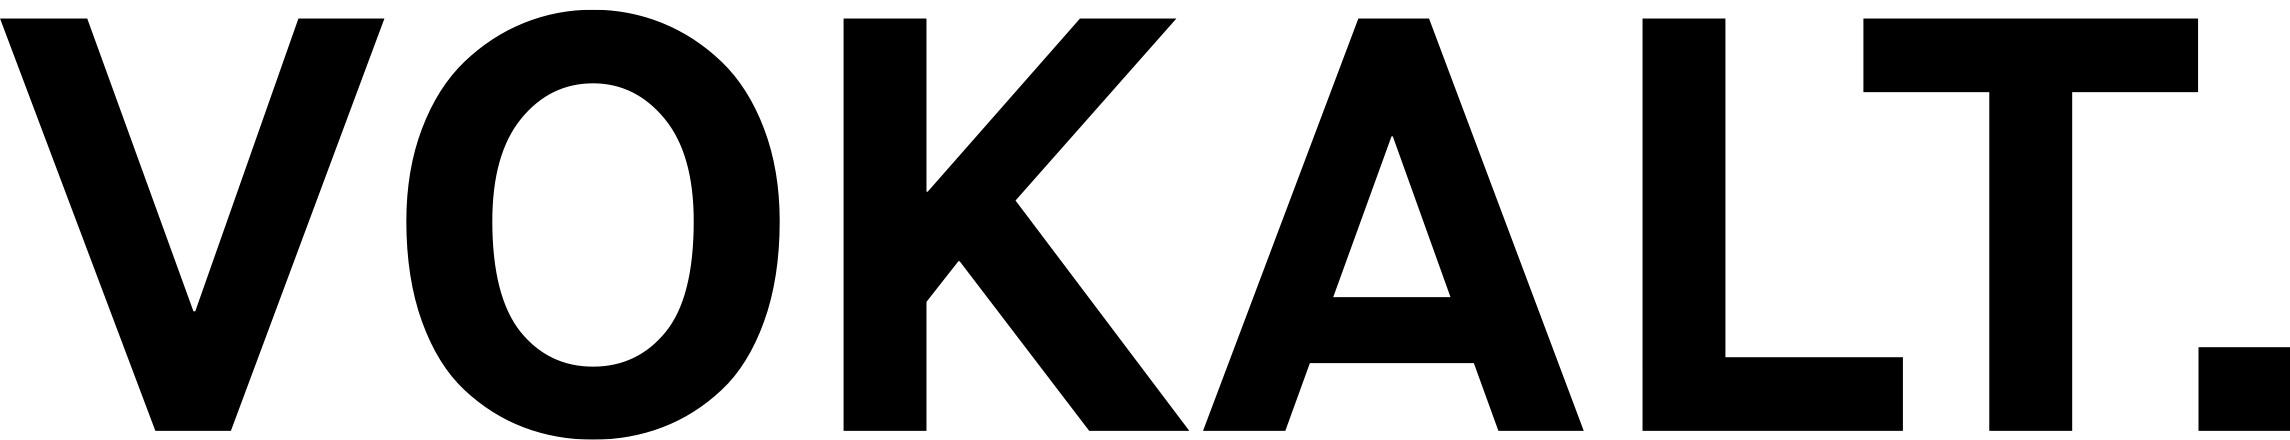 Vokalt logo